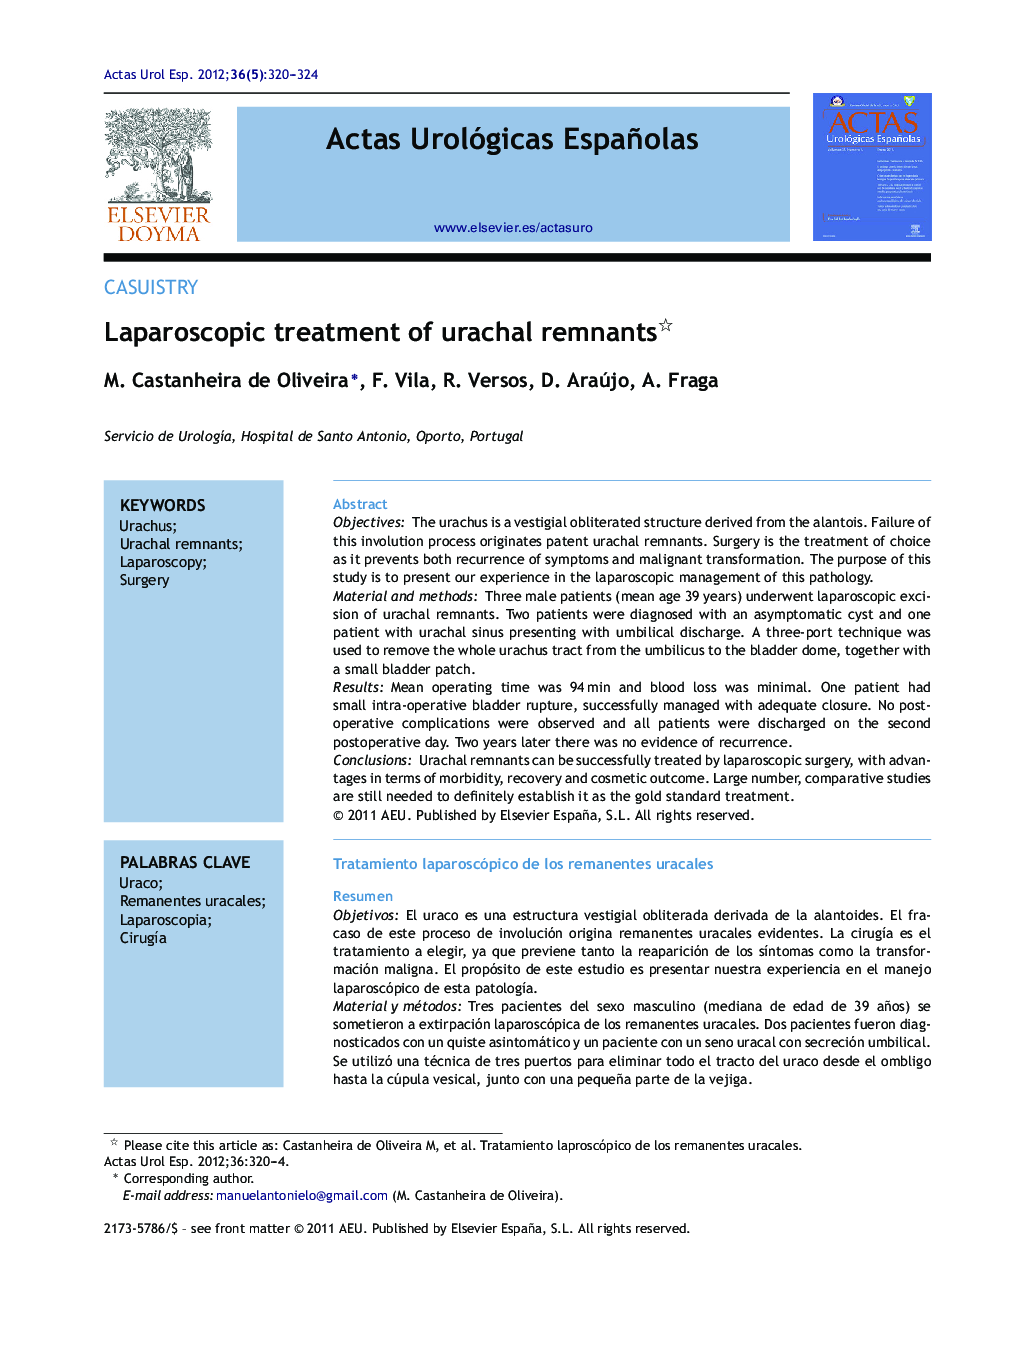 Laparoscopic treatment of urachal remnants 